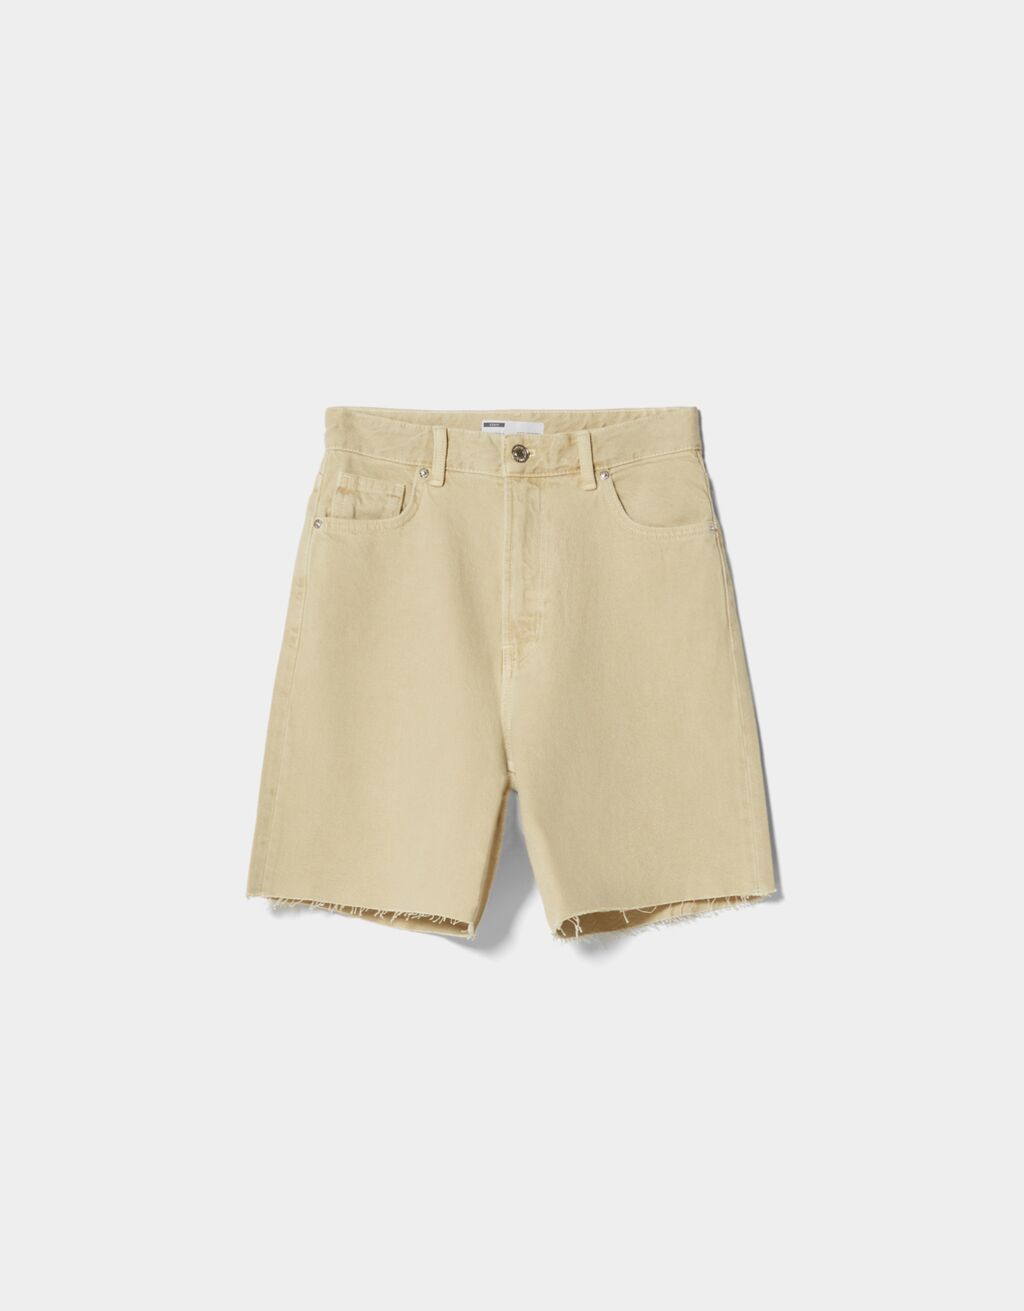 Vintage denim Bermuda shorts with rips